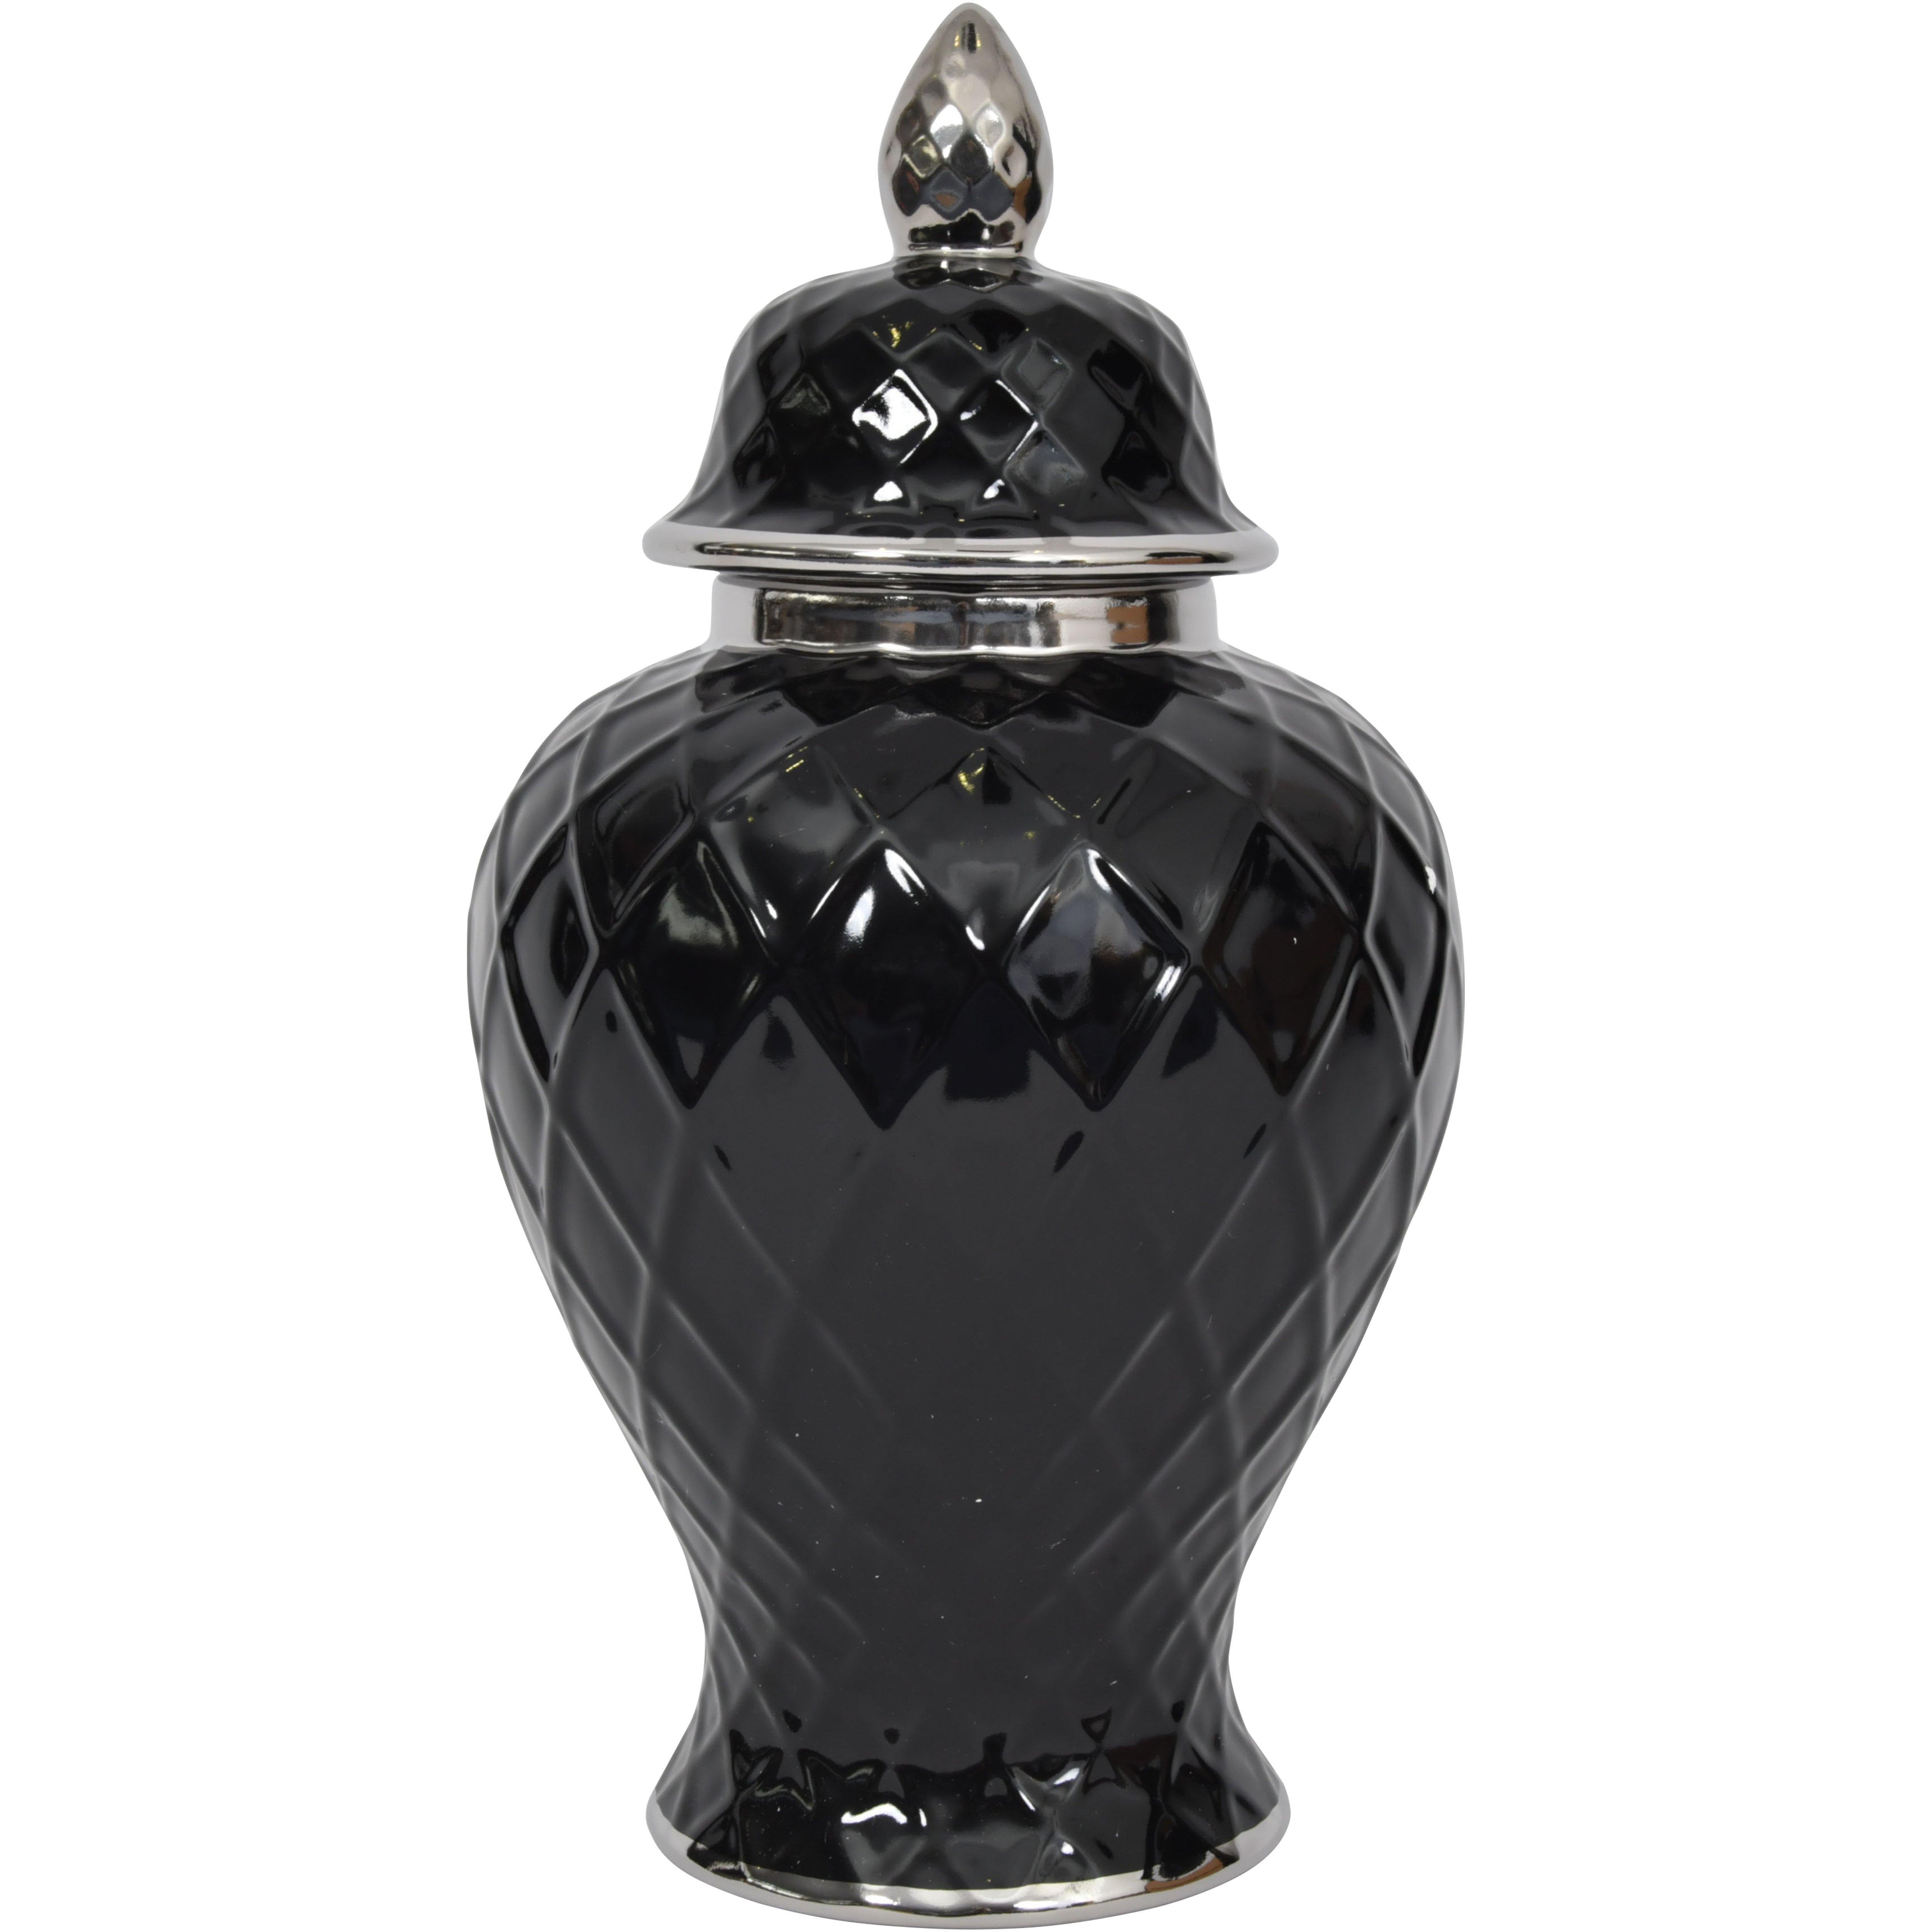 Mayfair Black and Silver Ceramic Ginger Jar - image 1